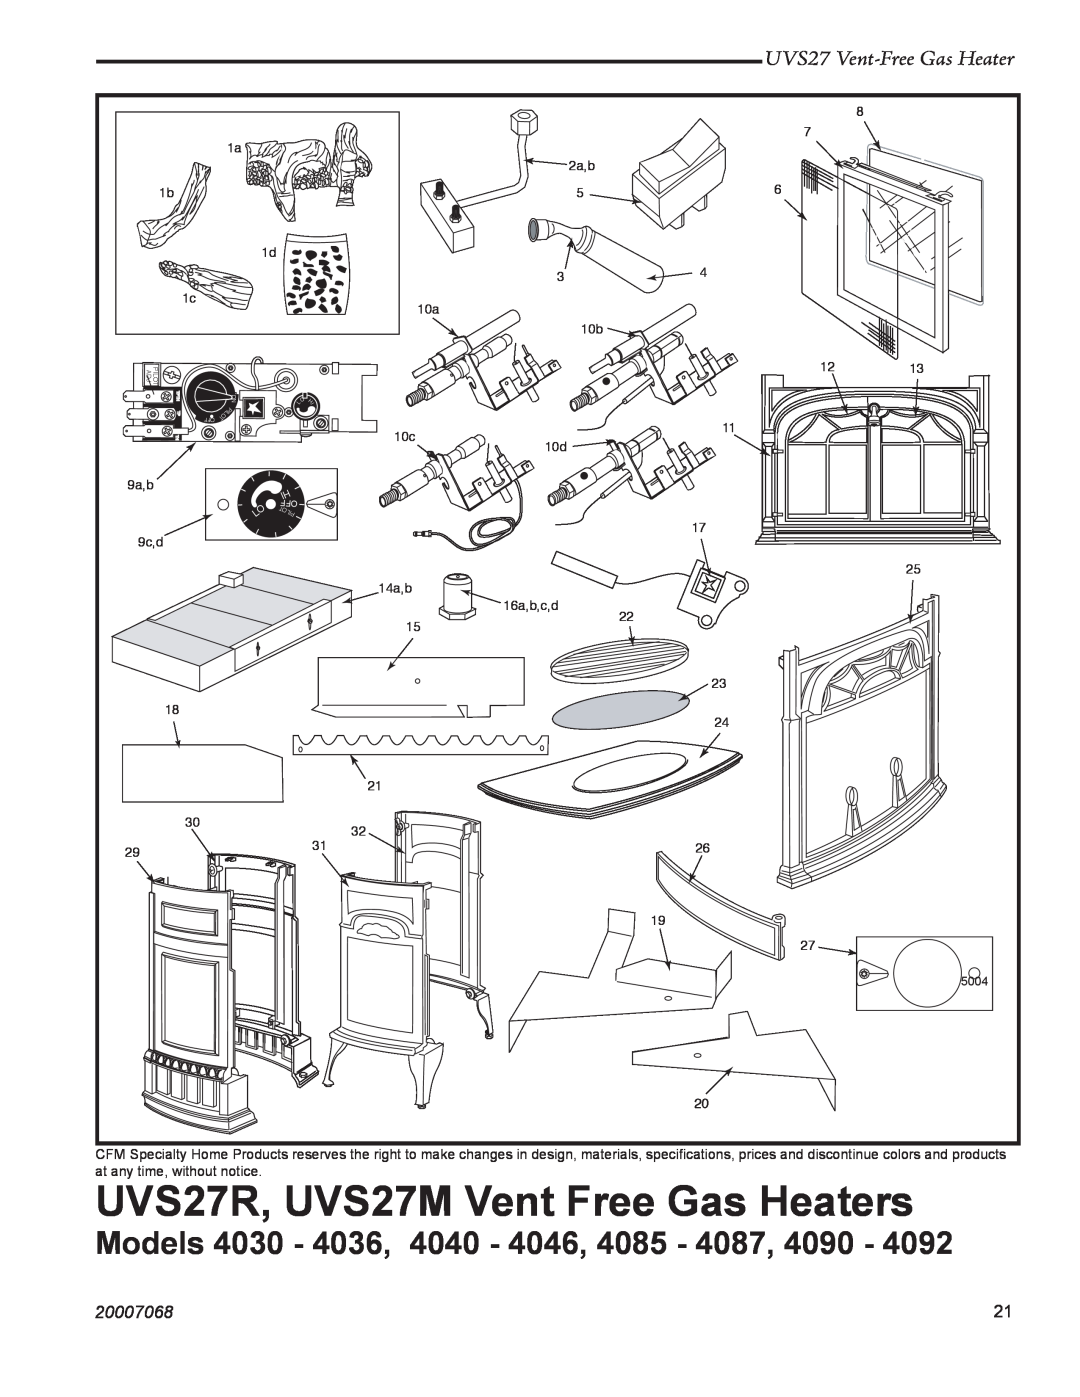 Vermont Casting 4040 - 4046, 4090 - 4092 manual UVS27R, UVS27M Vent Free Gas Heaters, UVS27 Vent-FreeGas Heater, 20007068 